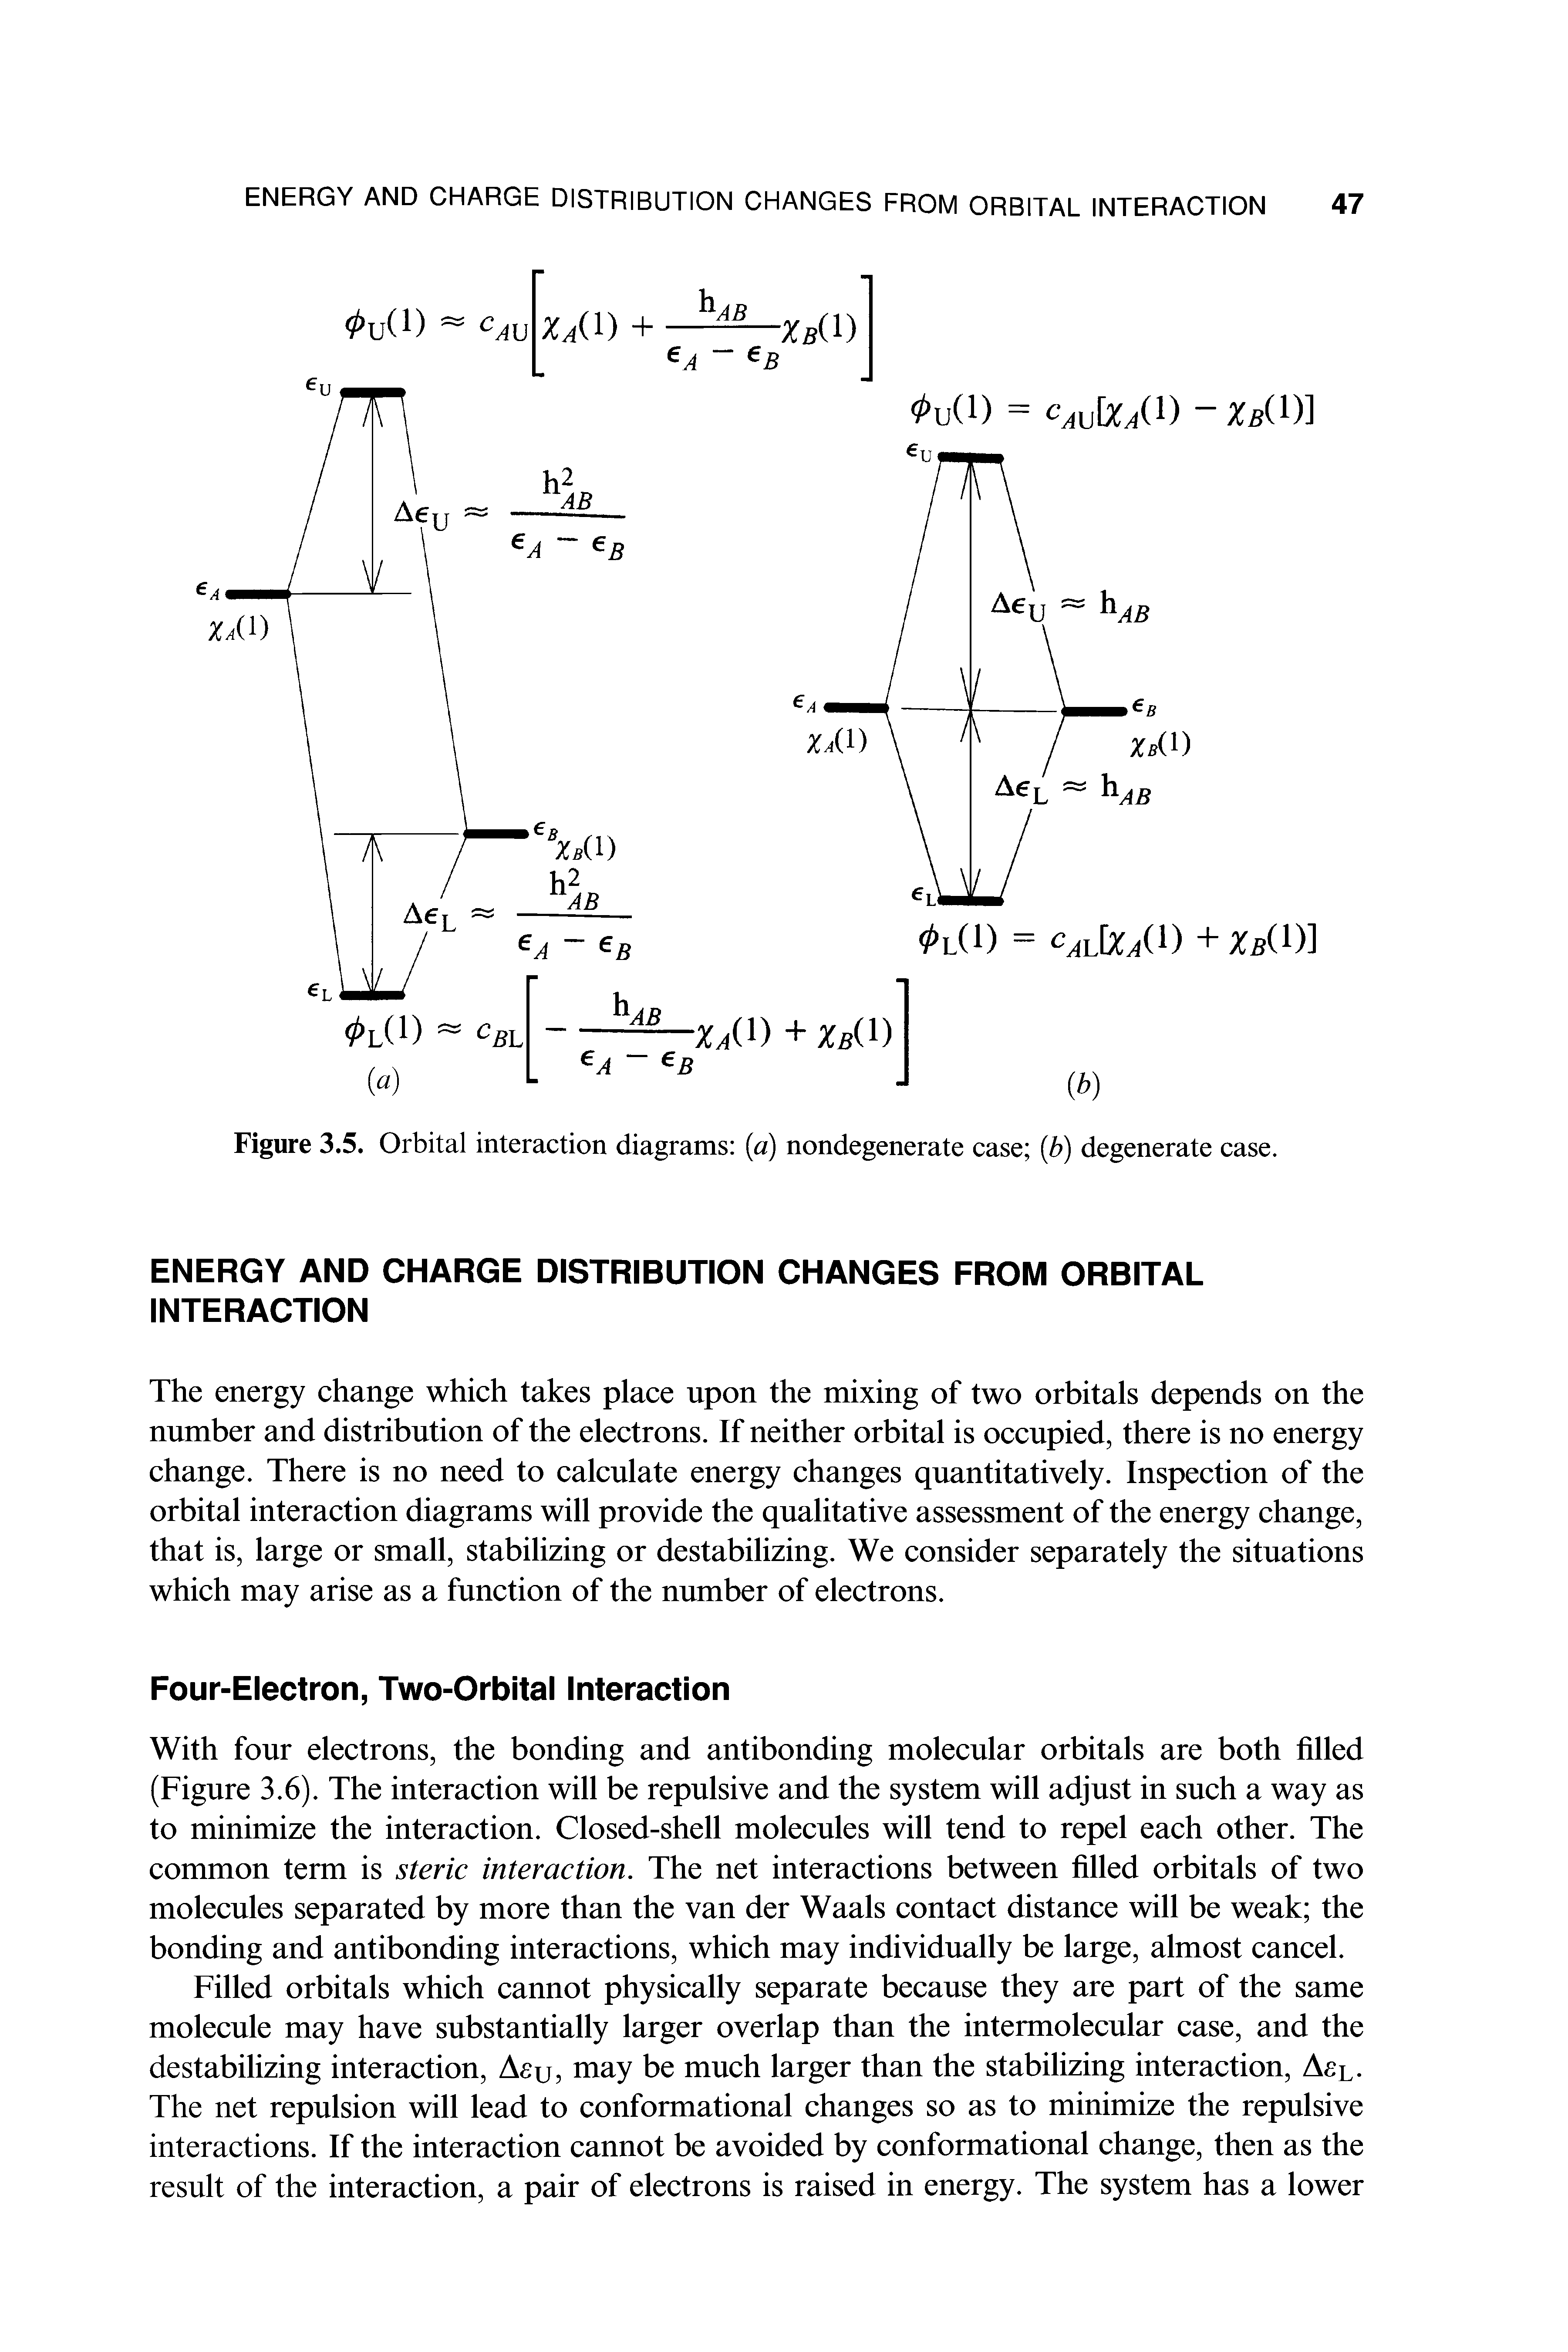 Figure 3.5. Orbital interaction diagrams a) nondegenerate case (b) degenerate case.